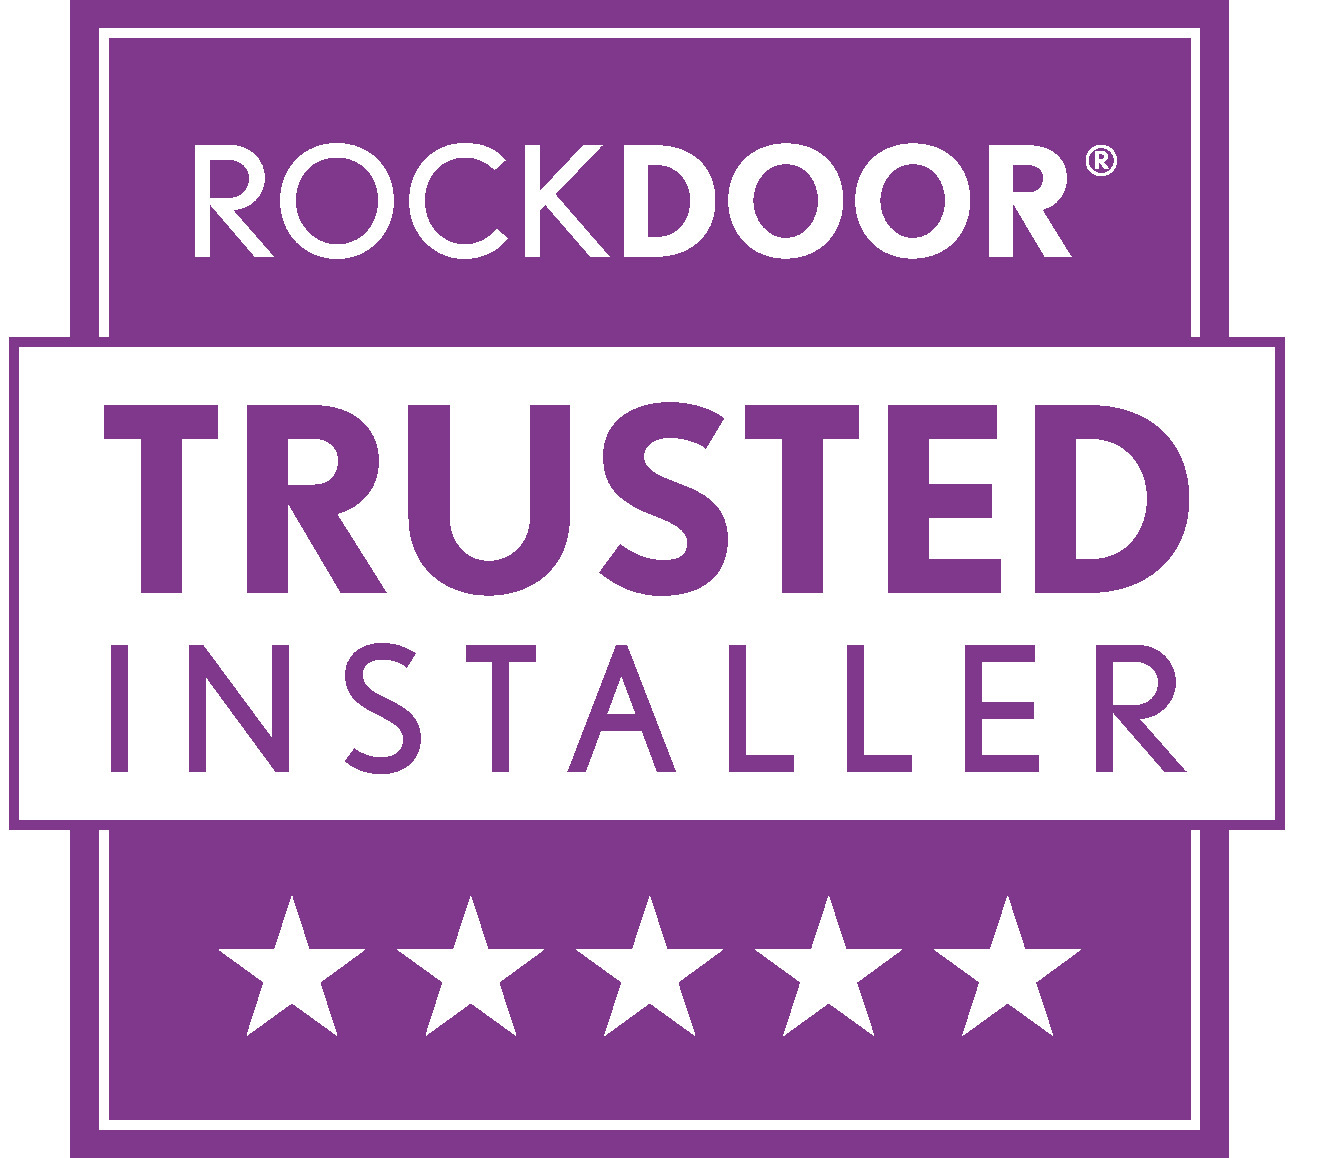 Rockdoor Trusted Installer